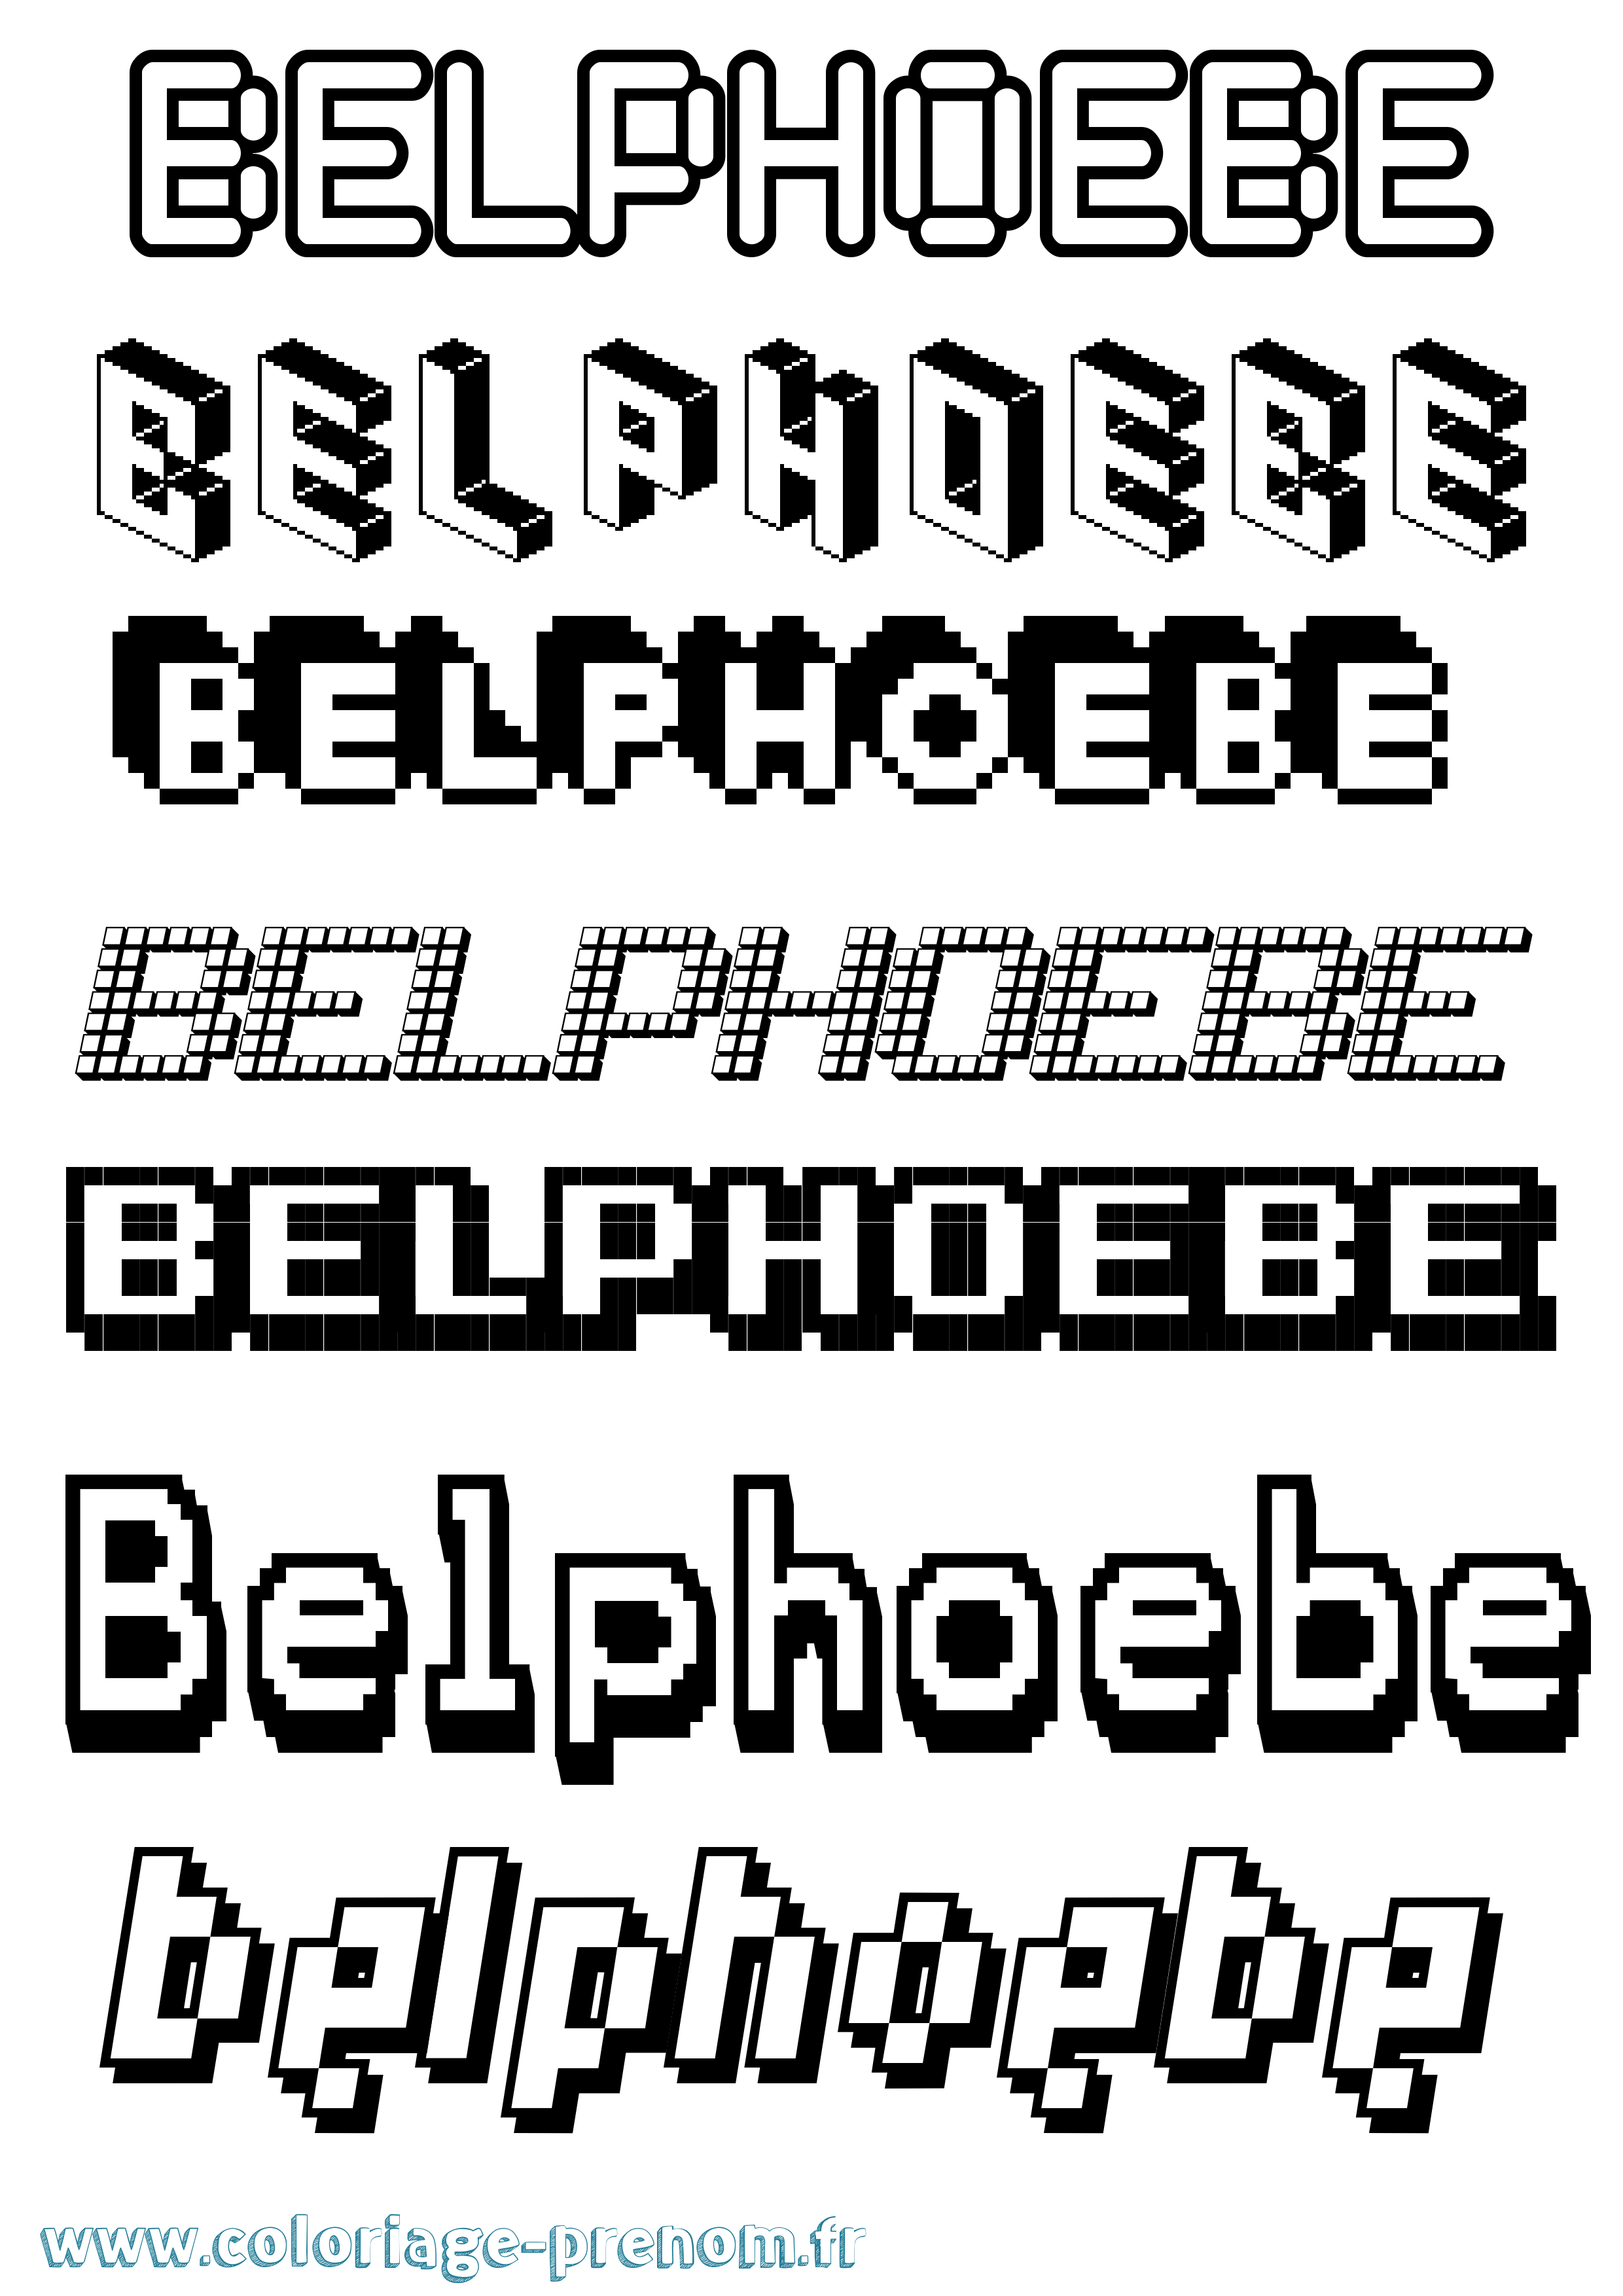 Coloriage prénom Belphoebe Pixel